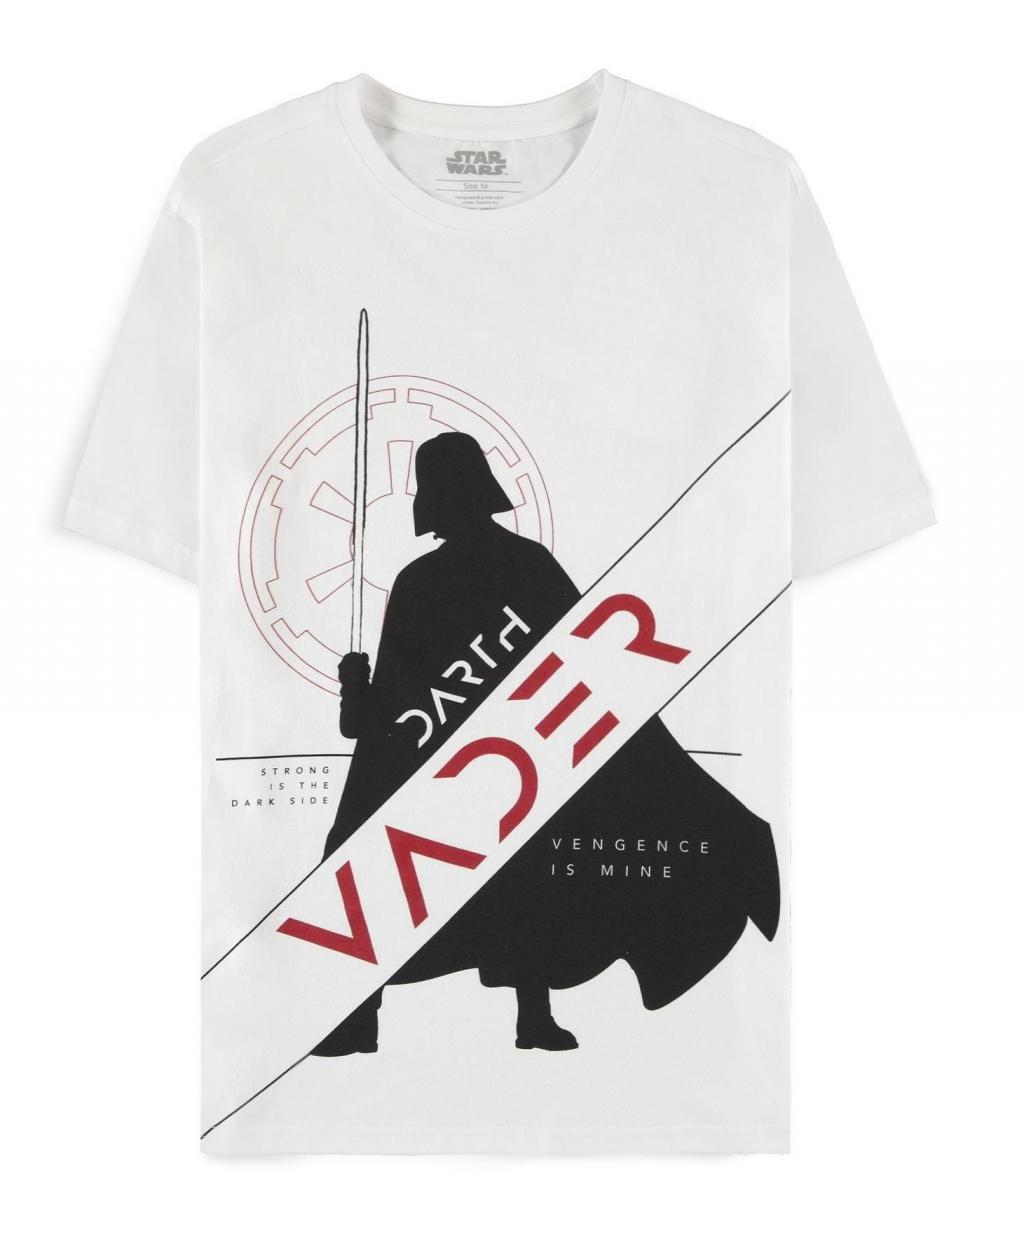 STAR WARS - Obi Wan Kenobi - Vader - T-Shirt Homme (M)